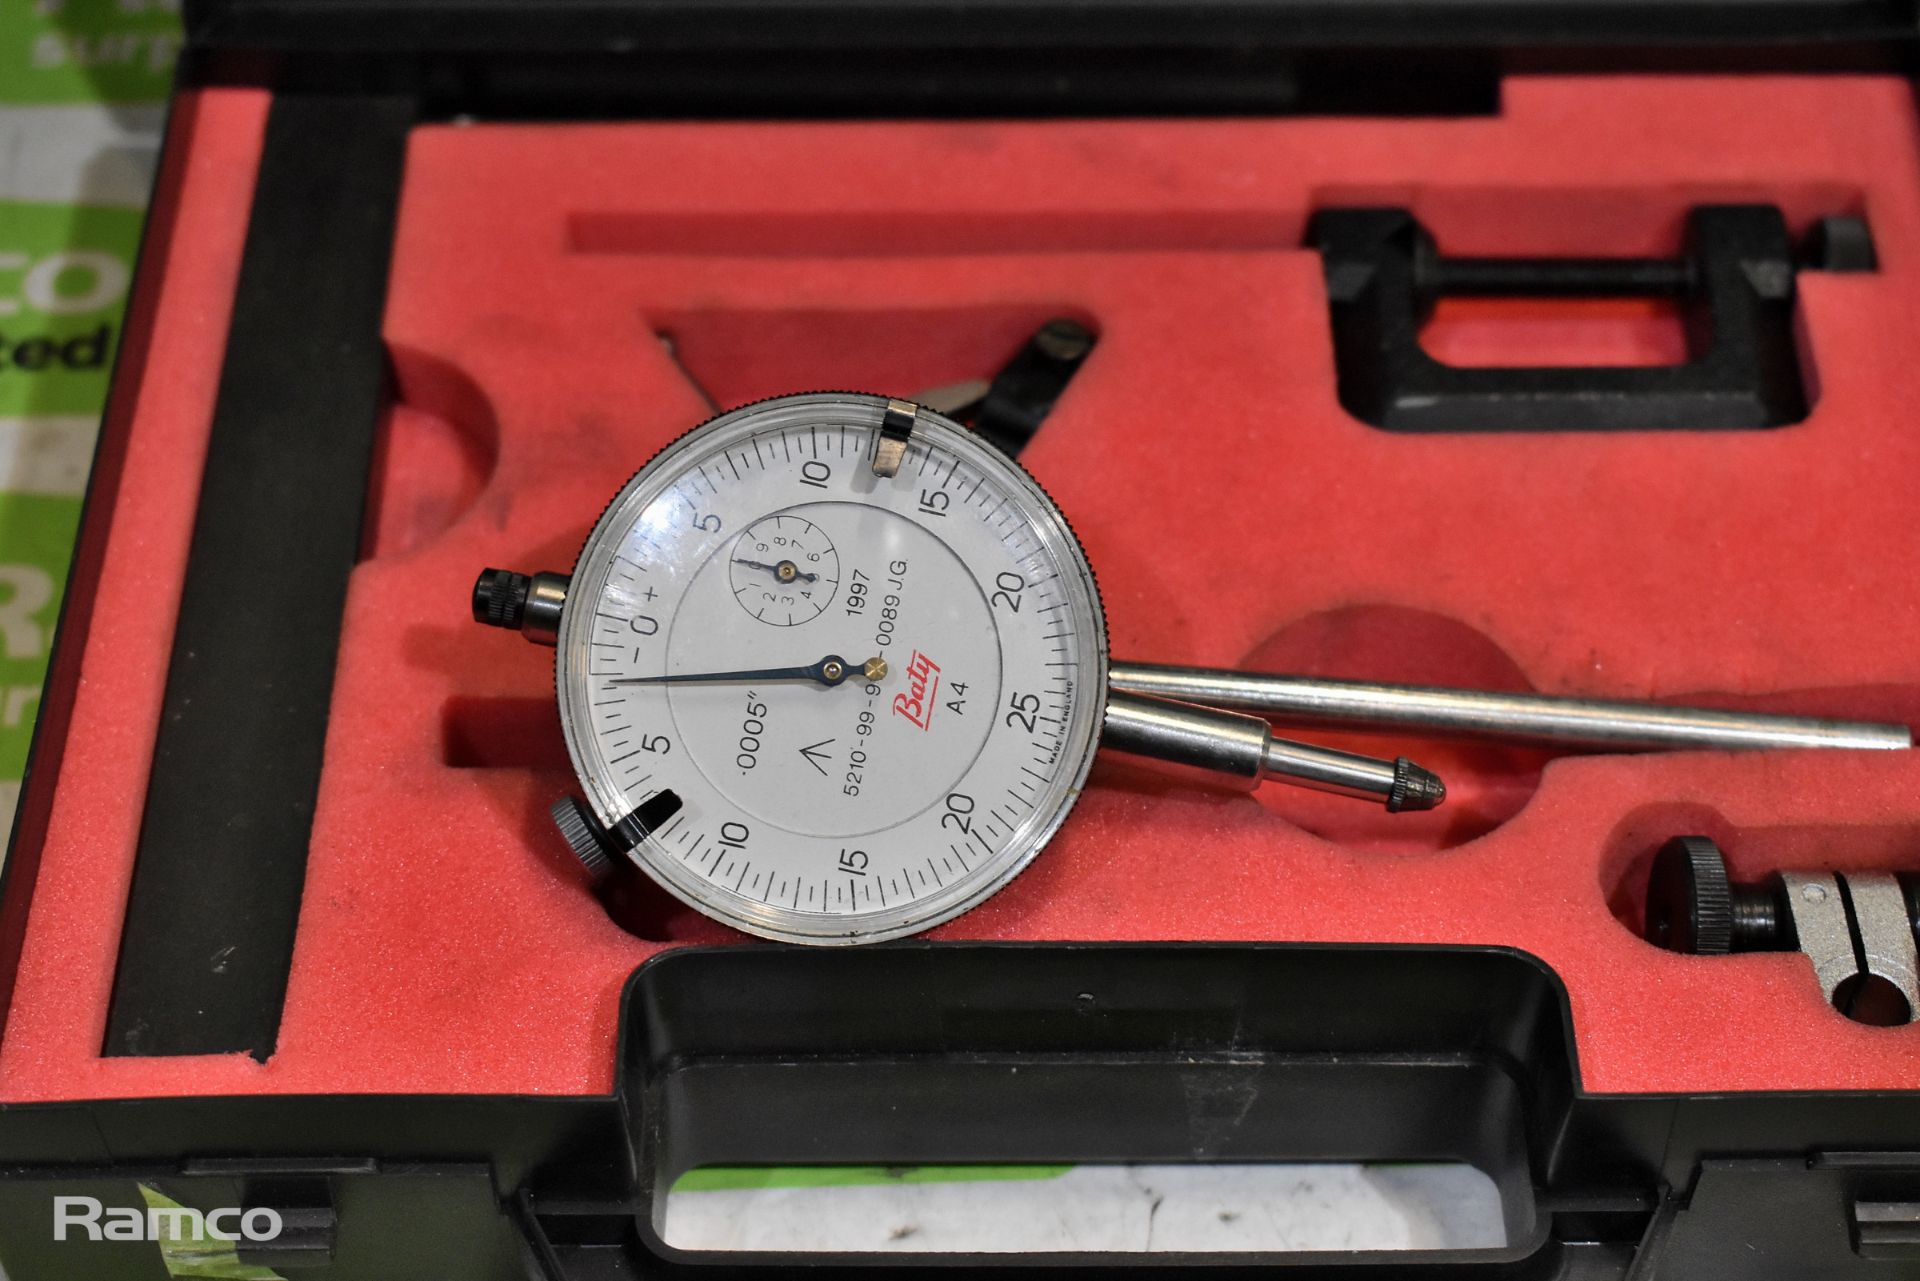 Baty clock gauge dial test indicator kit - Image 2 of 4